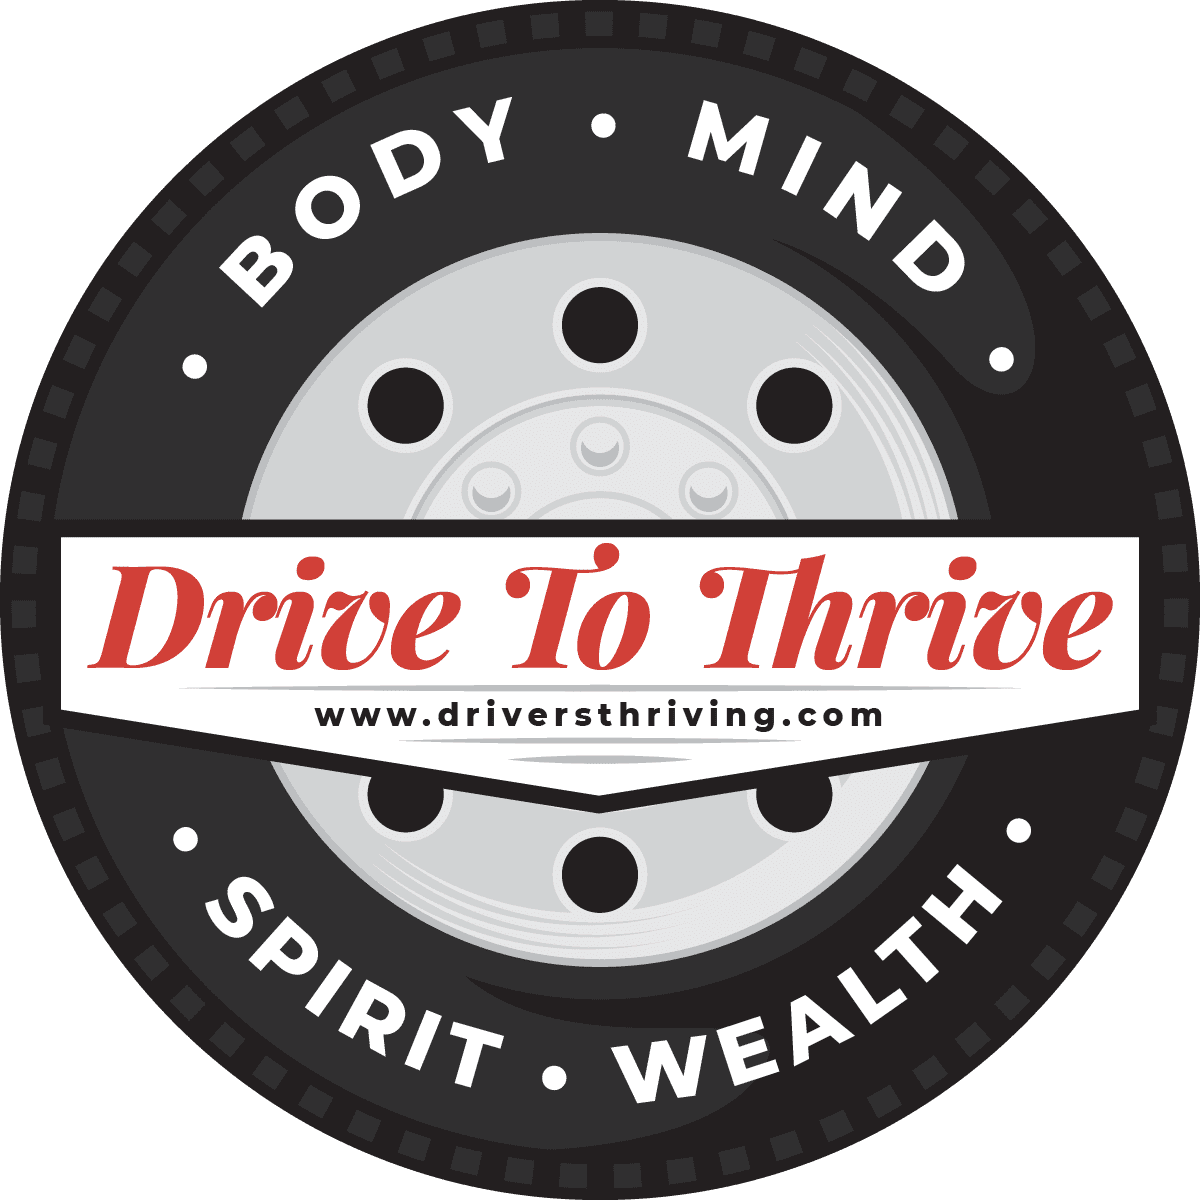 Drive to thrive logo